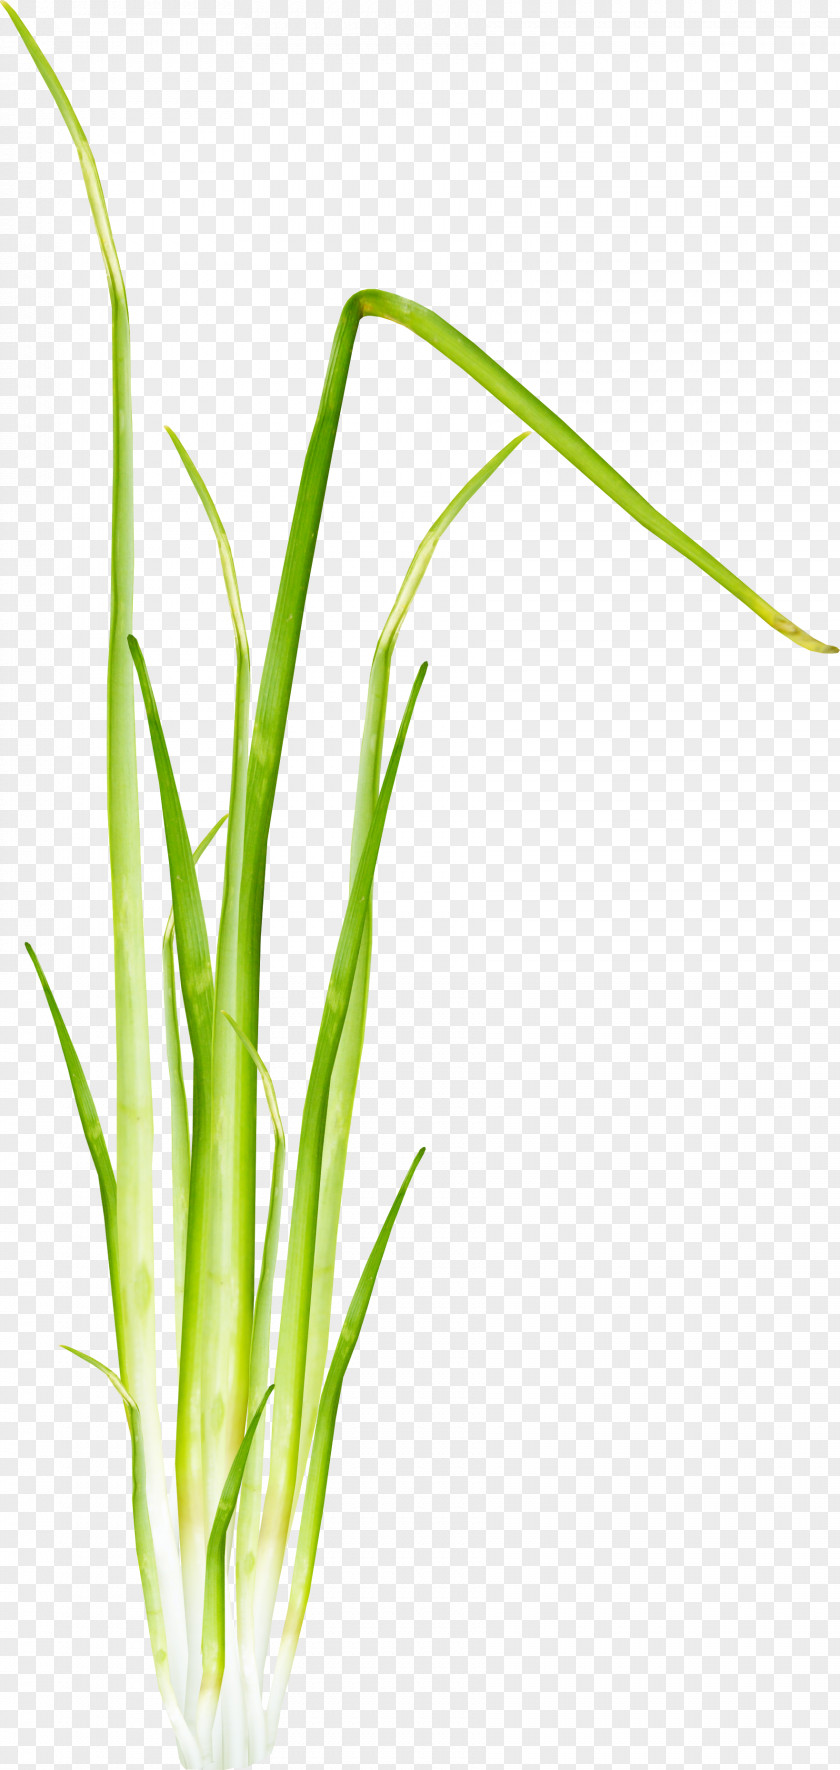 Allium Drumstick Flowers Welsh Onion Psd Vector Graphics Clip Art PNG